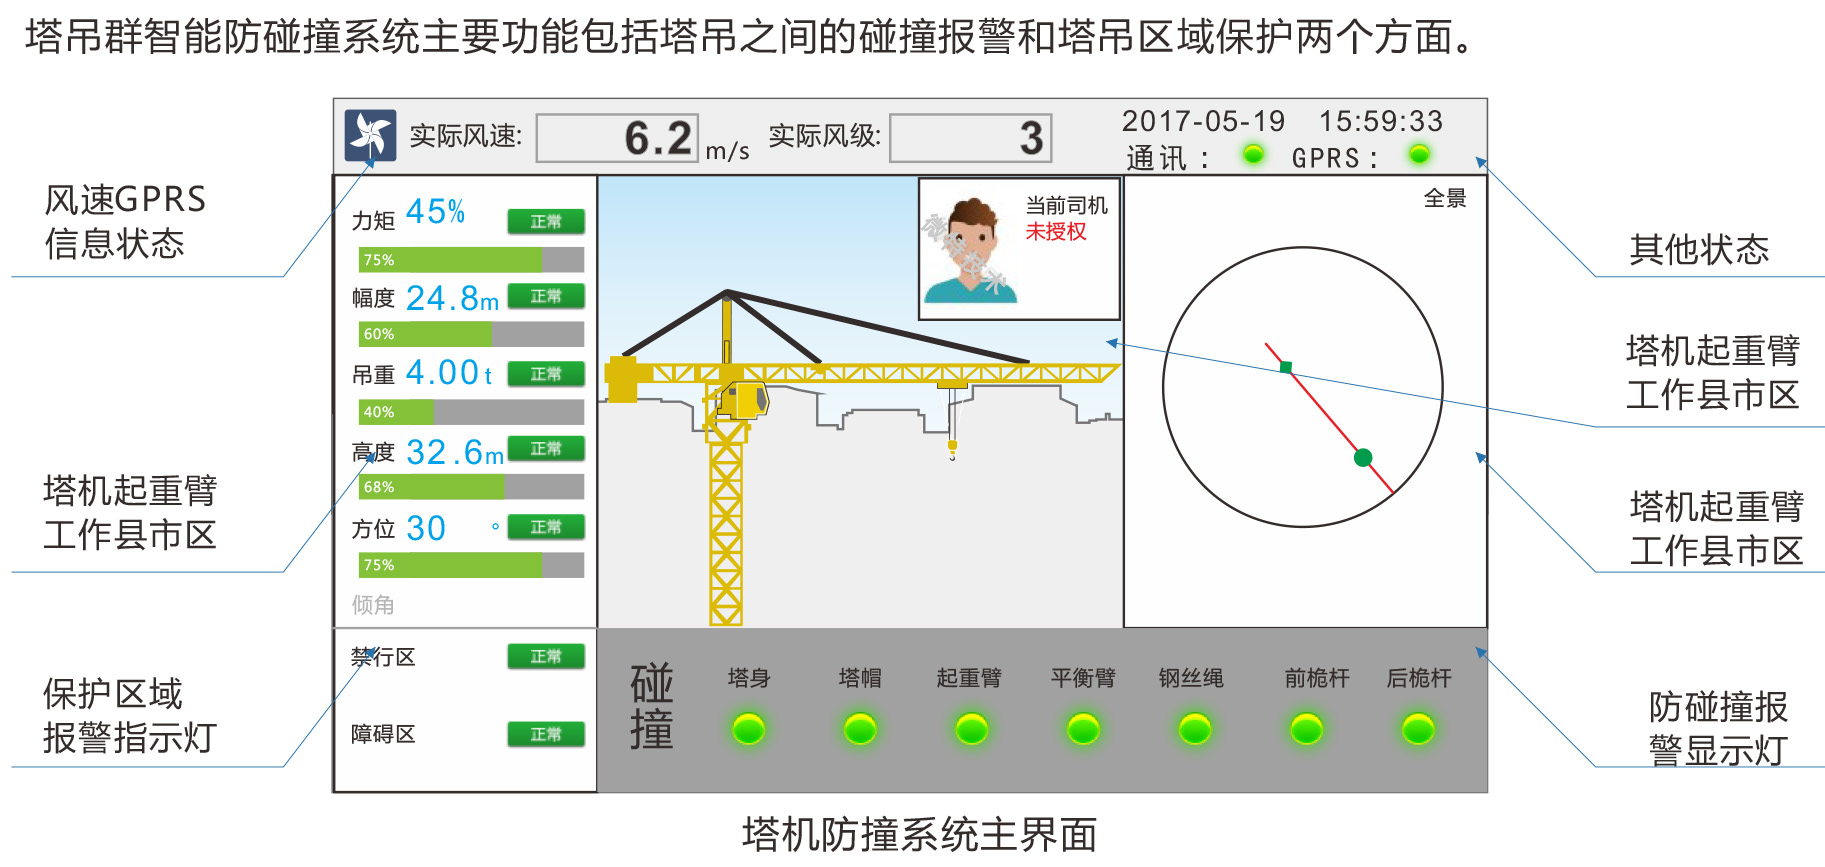 Smart construction site - tower crane anti-collision interface